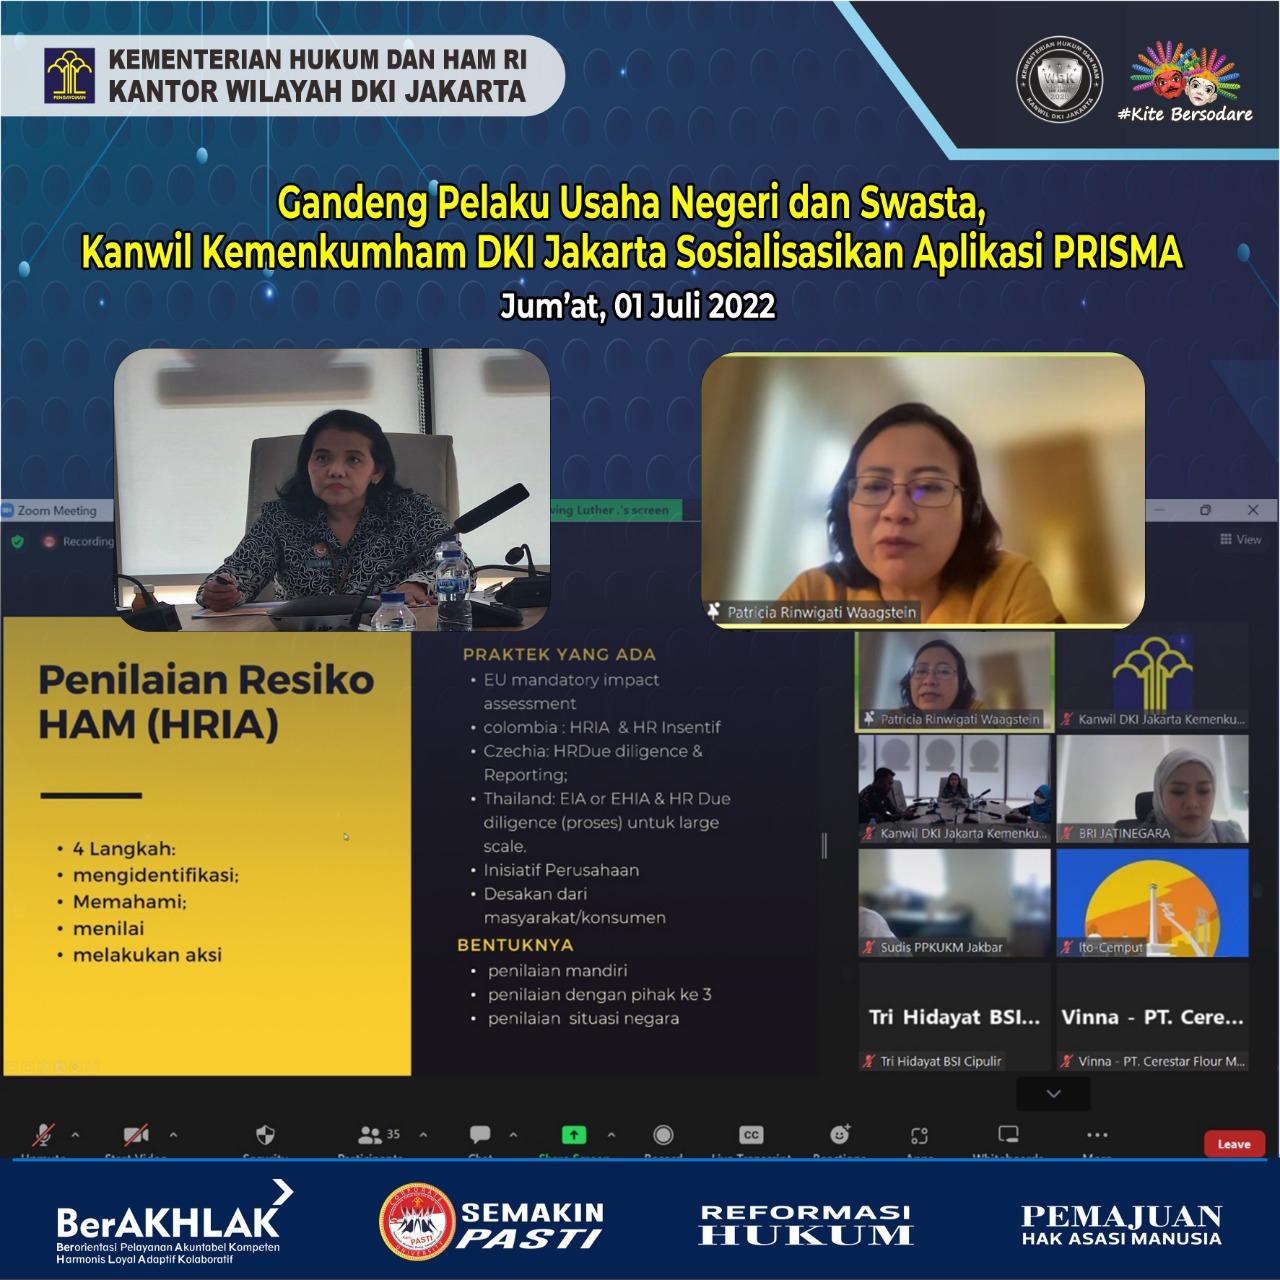 Gandeng Pelaku Usaha Negeri dan Swasta, Kanwil Kemenkumham DKI Jakarta Sosialisasikan Aplikasi PRISMA